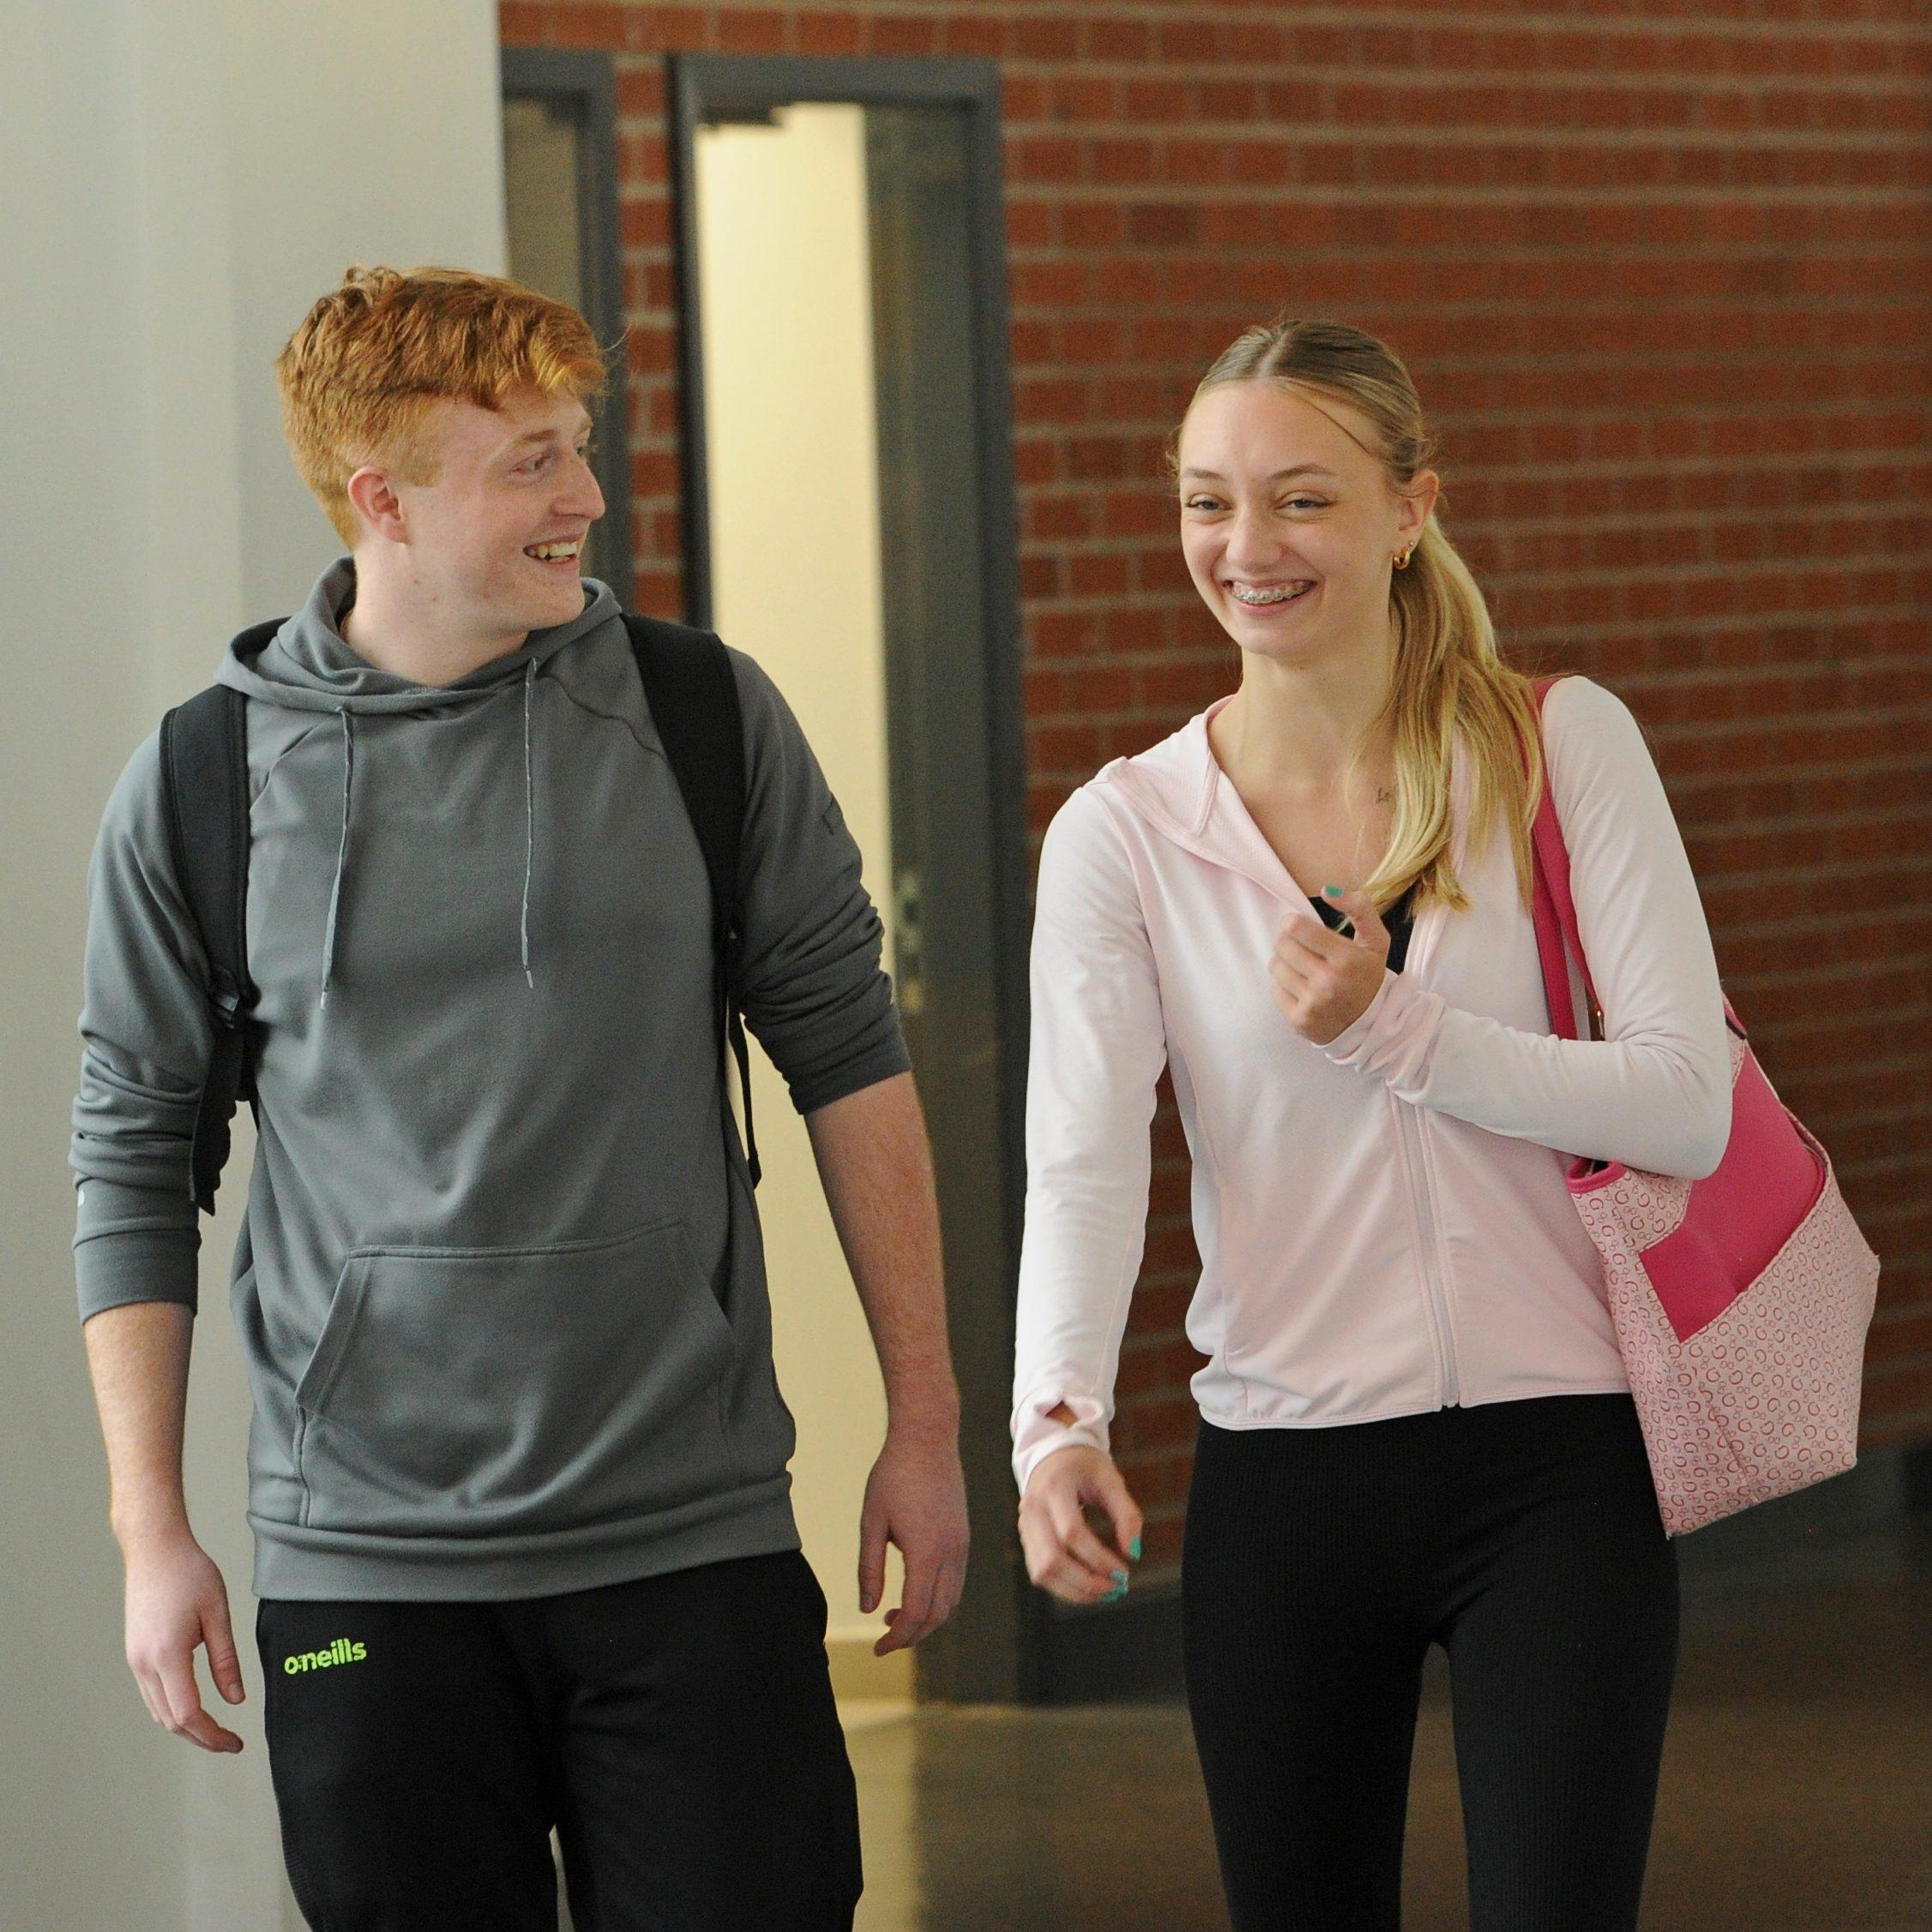 16 18 Callout Image - Students walking down corridor